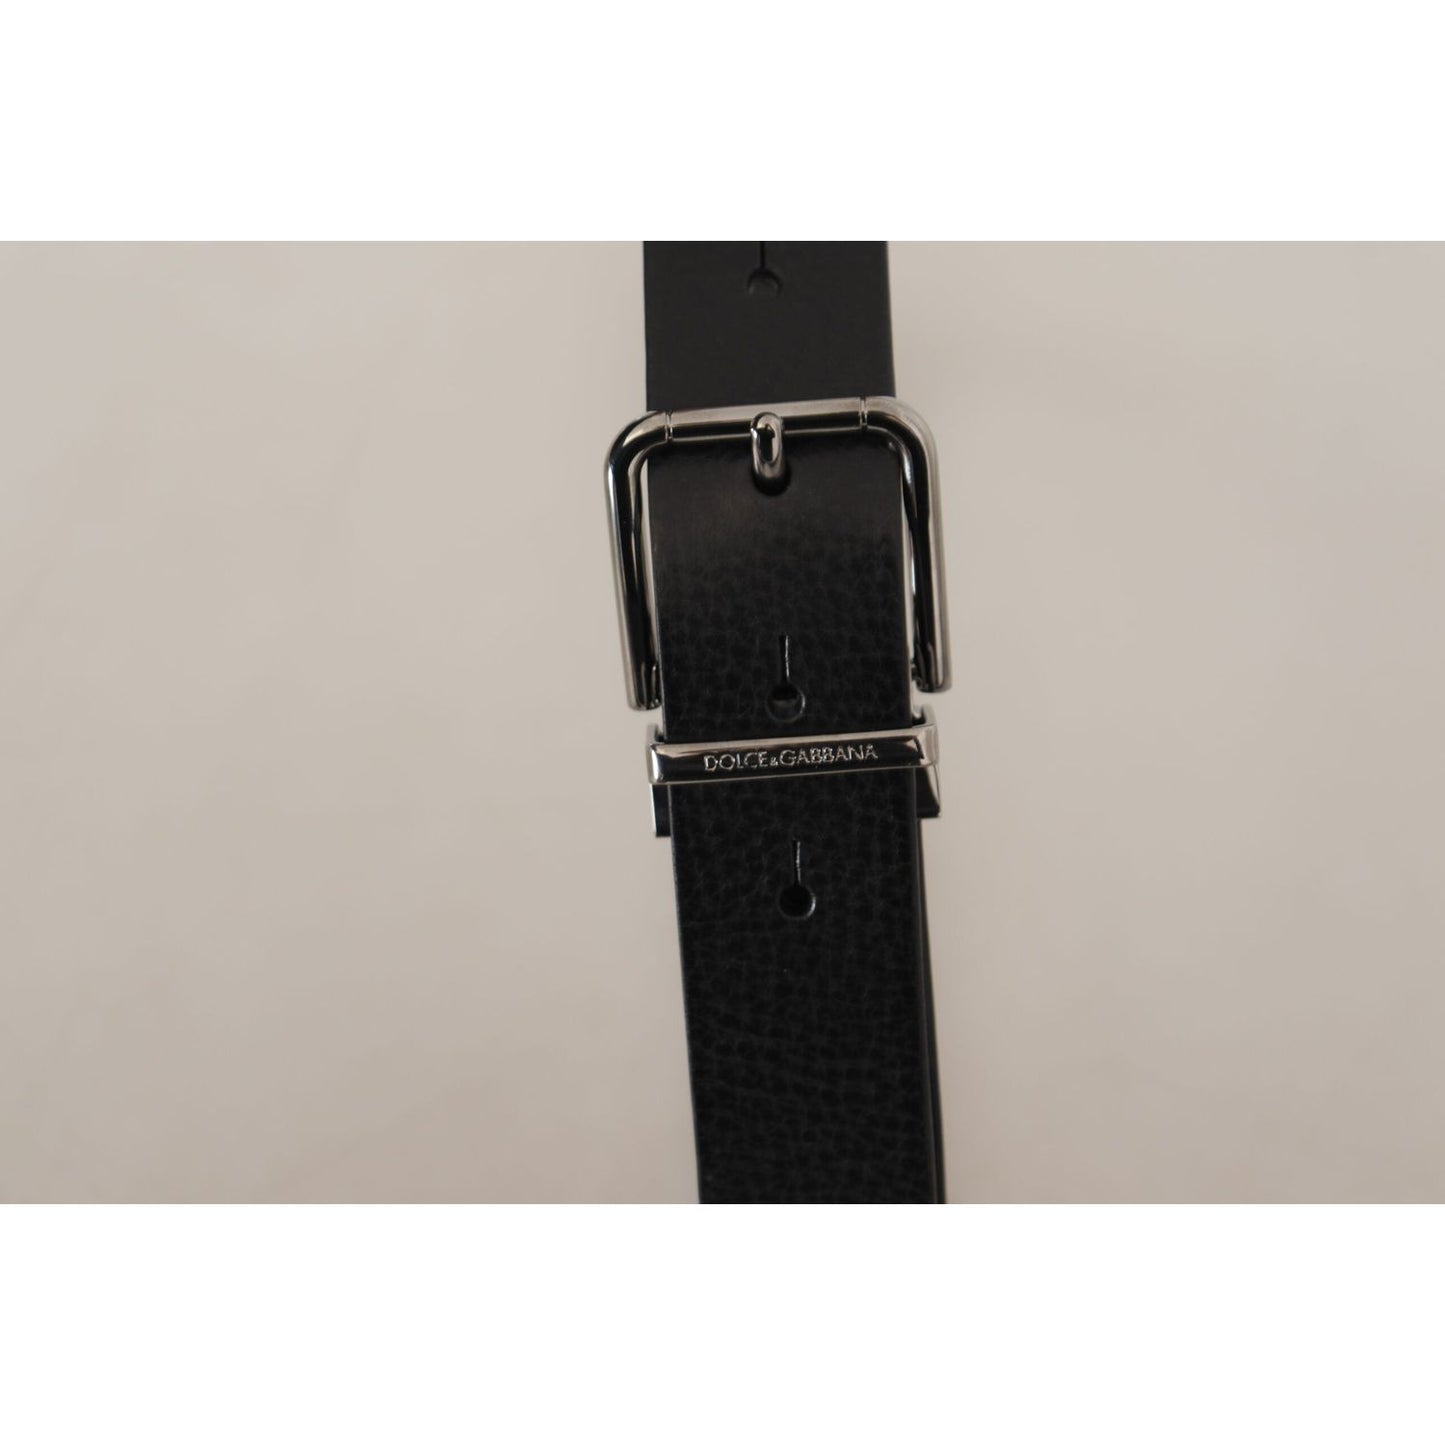 Dolce & Gabbana Elegant Black Leather Belt with Metal Buckle black-plain-leather-silver-tone-metal-buckle-belt IMG_0762-scaled-fae1fa5d-0ba.jpg